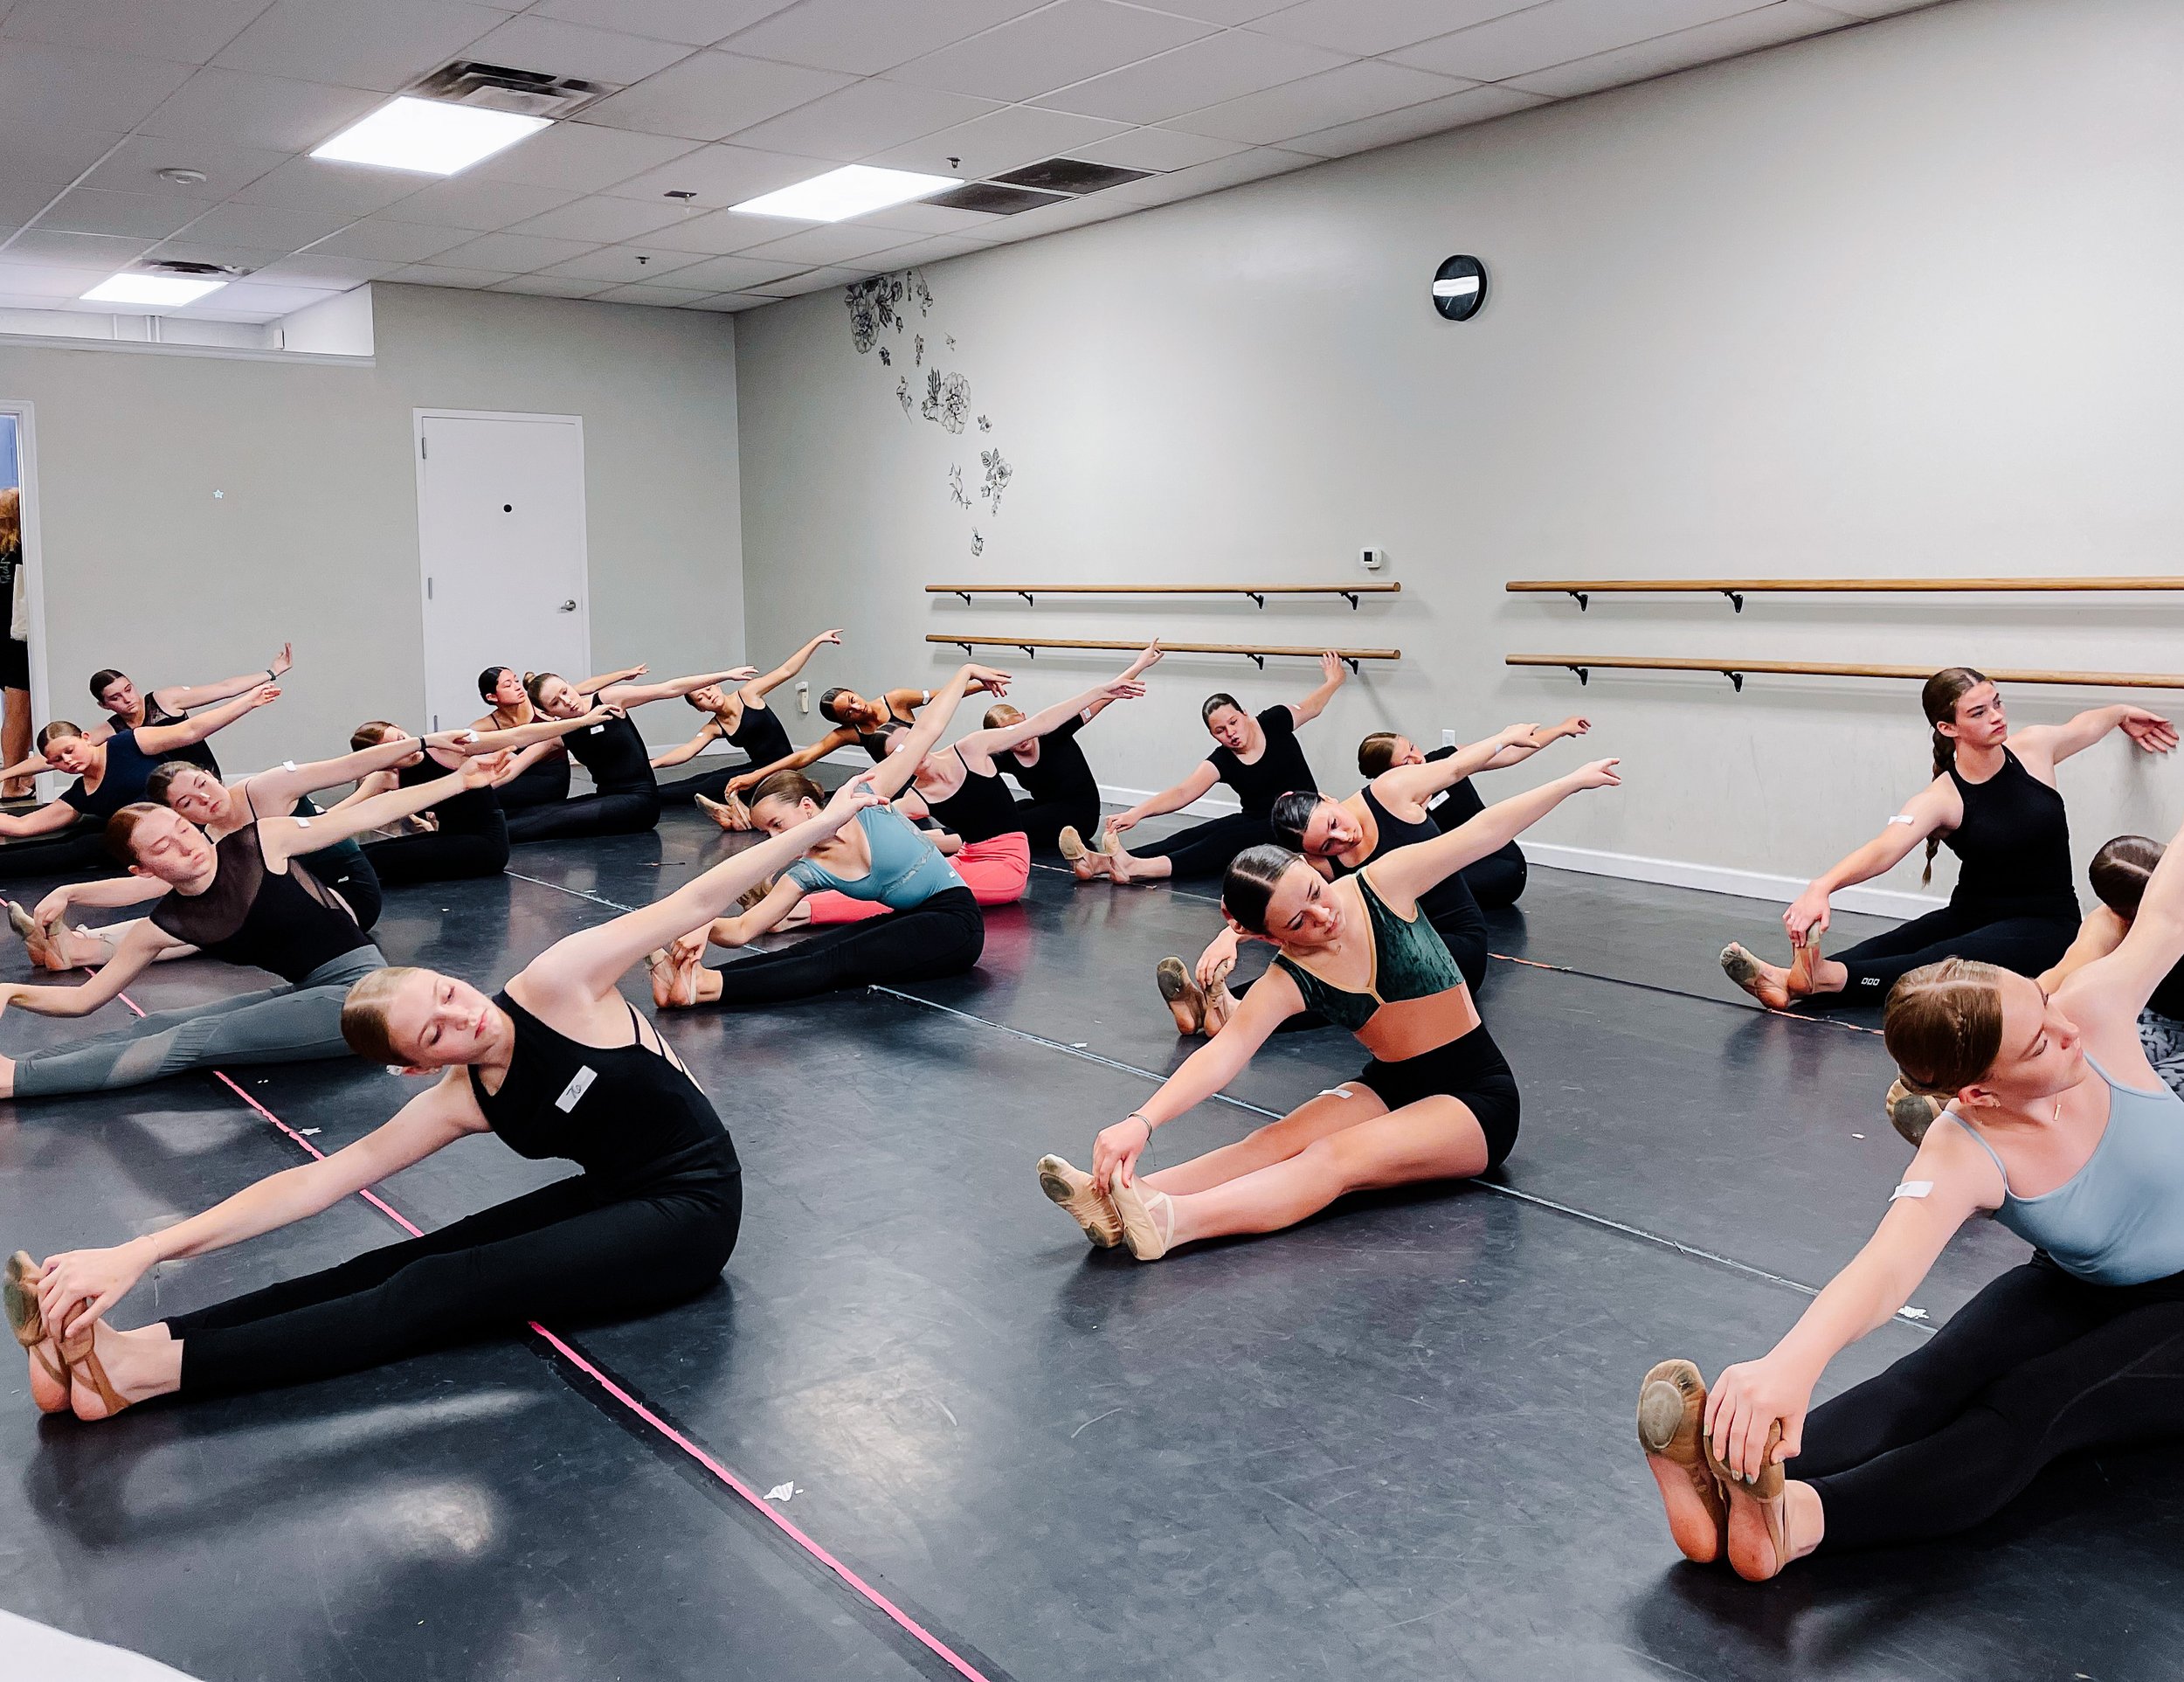 Spark Dance Academy—Dance classes for kids in Queen Creek, AZ